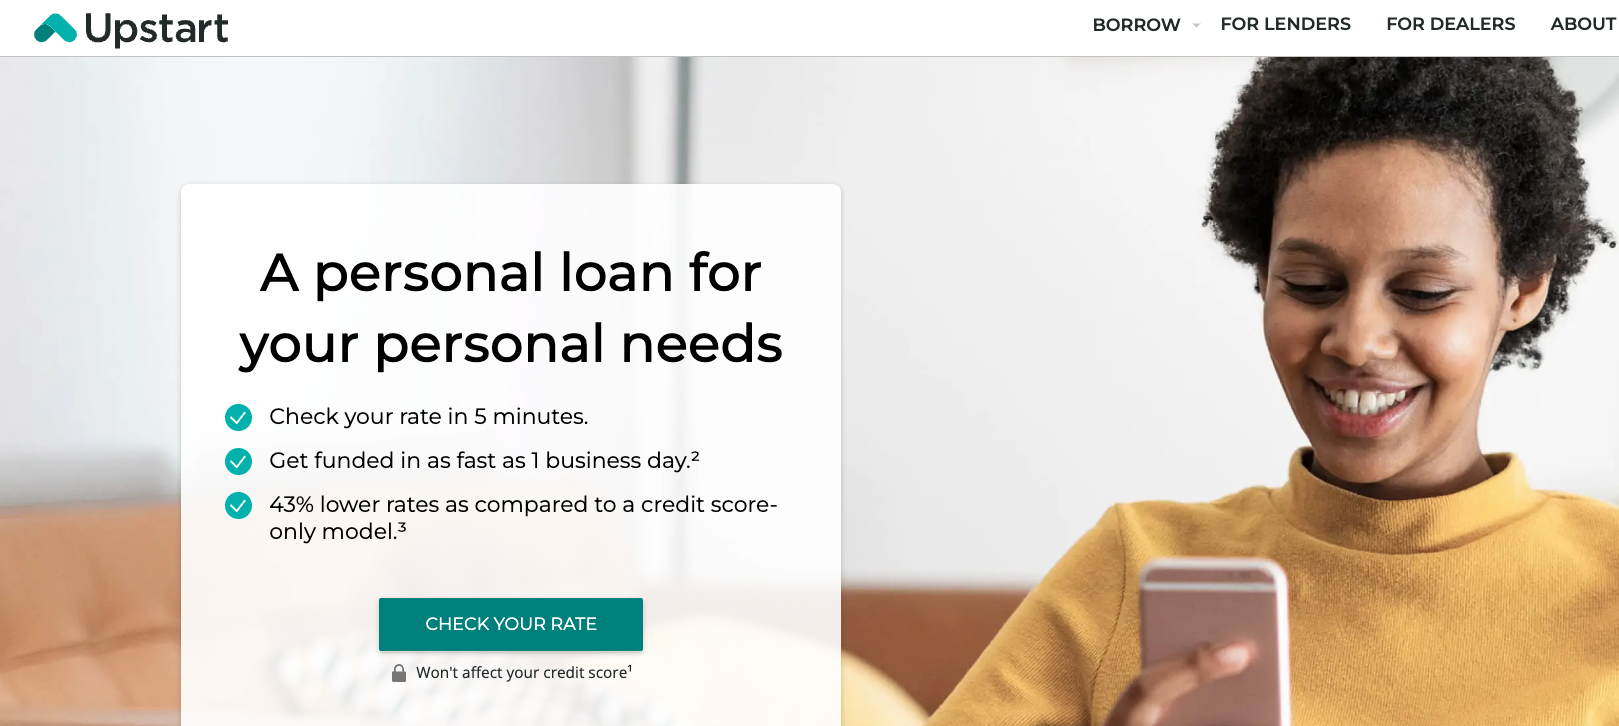 upstart personal loan